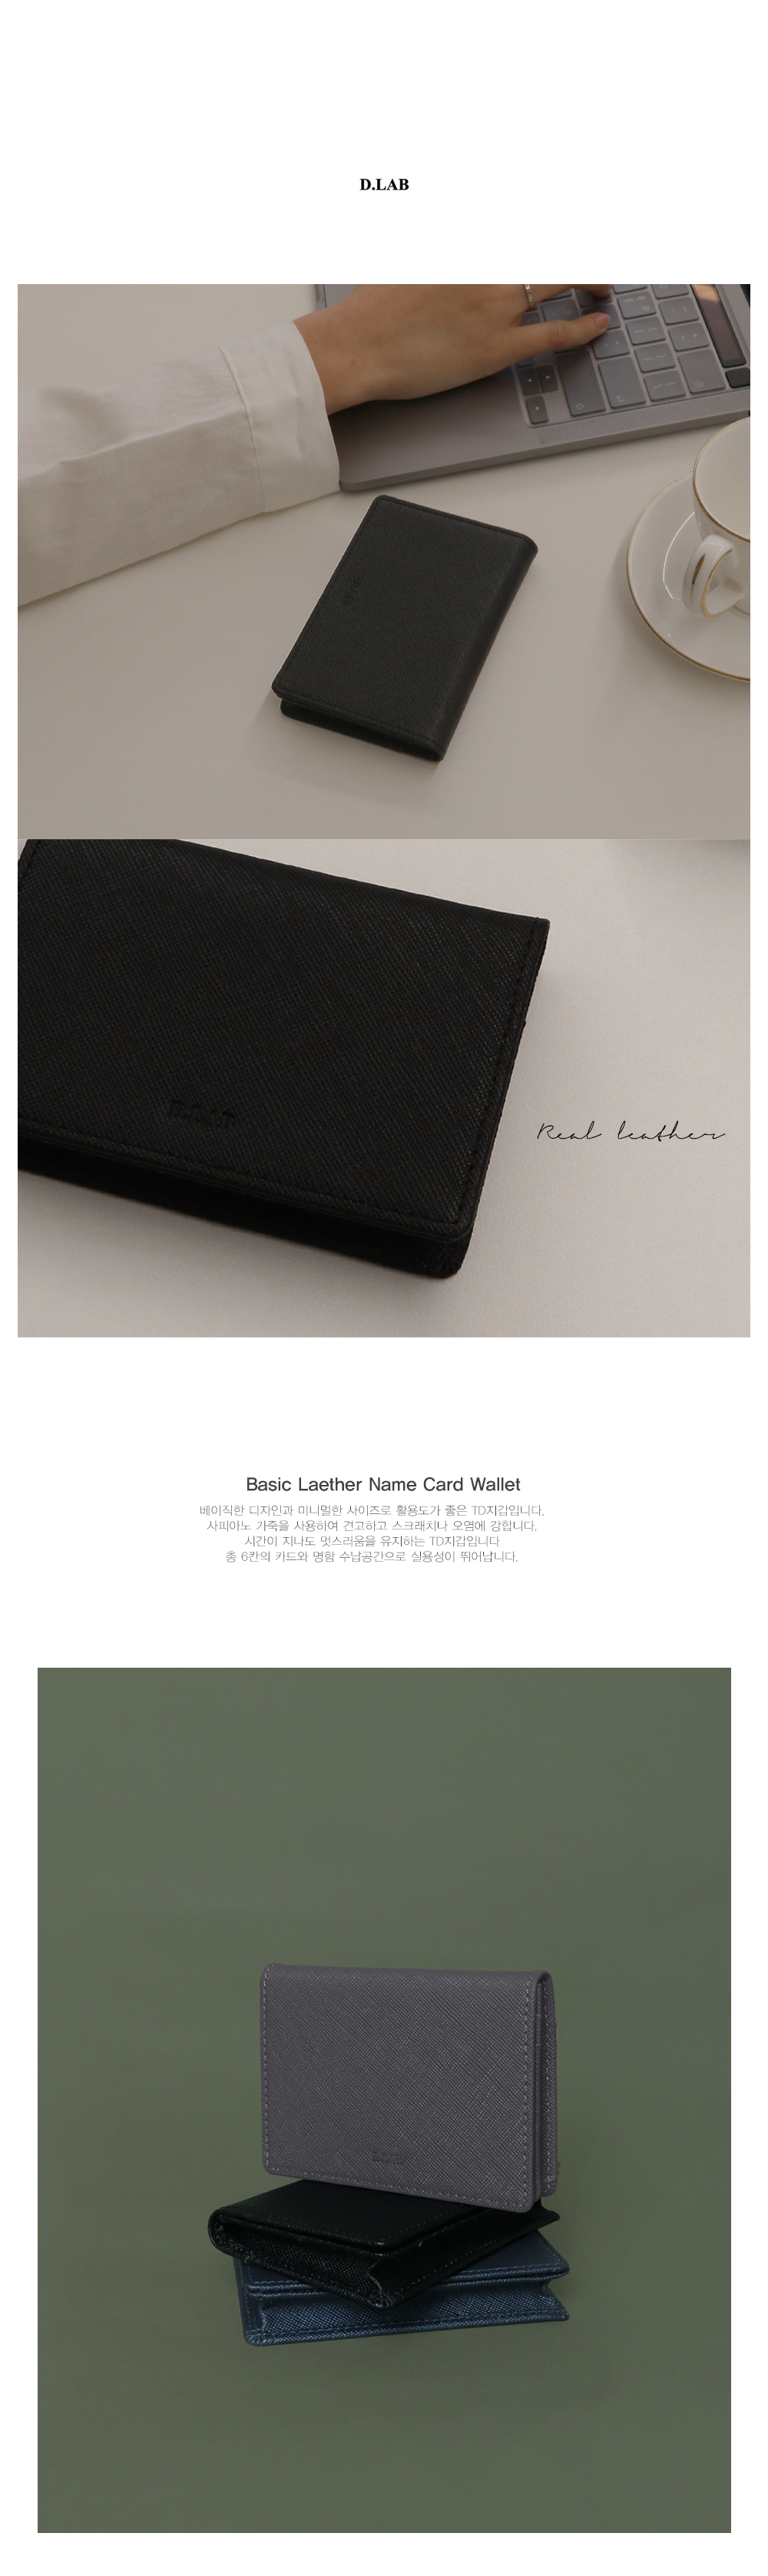 D.LAB Basic Leather Namecard wallet - 5colors 32,000원 - 디랩 패션잡화, 지갑, 명함지갑, 천연가죽 바보사랑 D.LAB Basic Leather Namecard wallet - 5colors 32,000원 - 디랩 패션잡화, 지갑, 명함지갑, 천연가죽 바보사랑